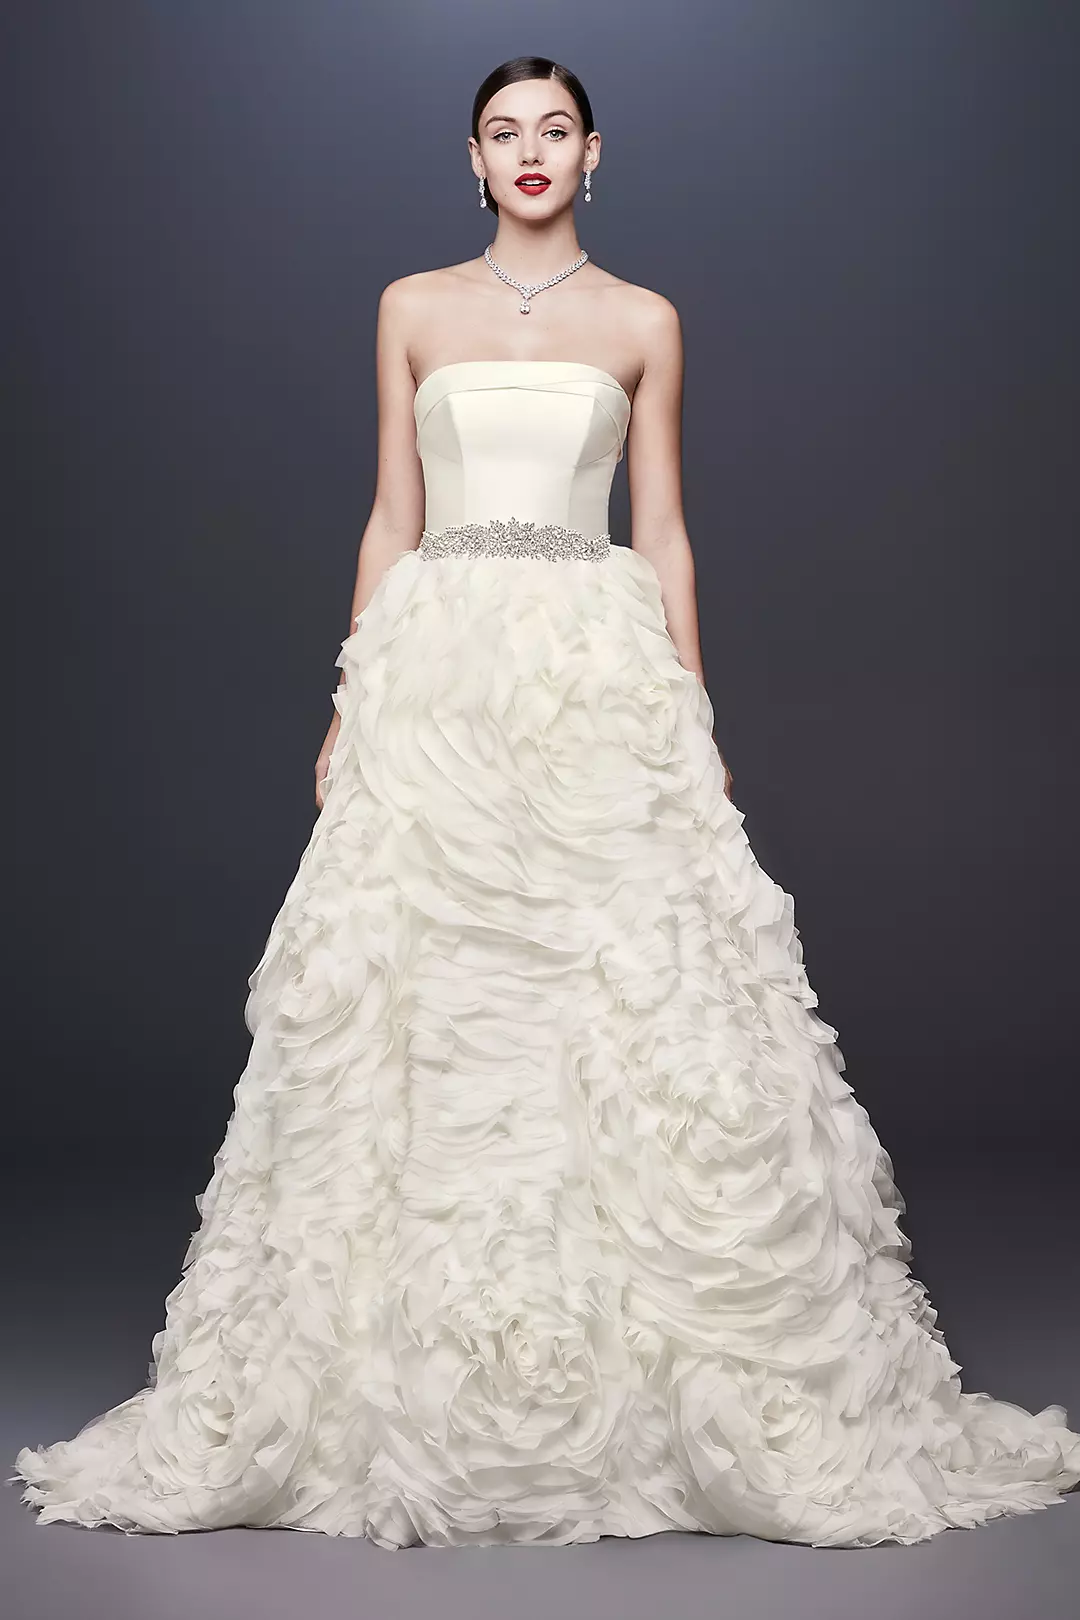 Chiffon Rosette Strapless Ball Gown Wedding Dress Image